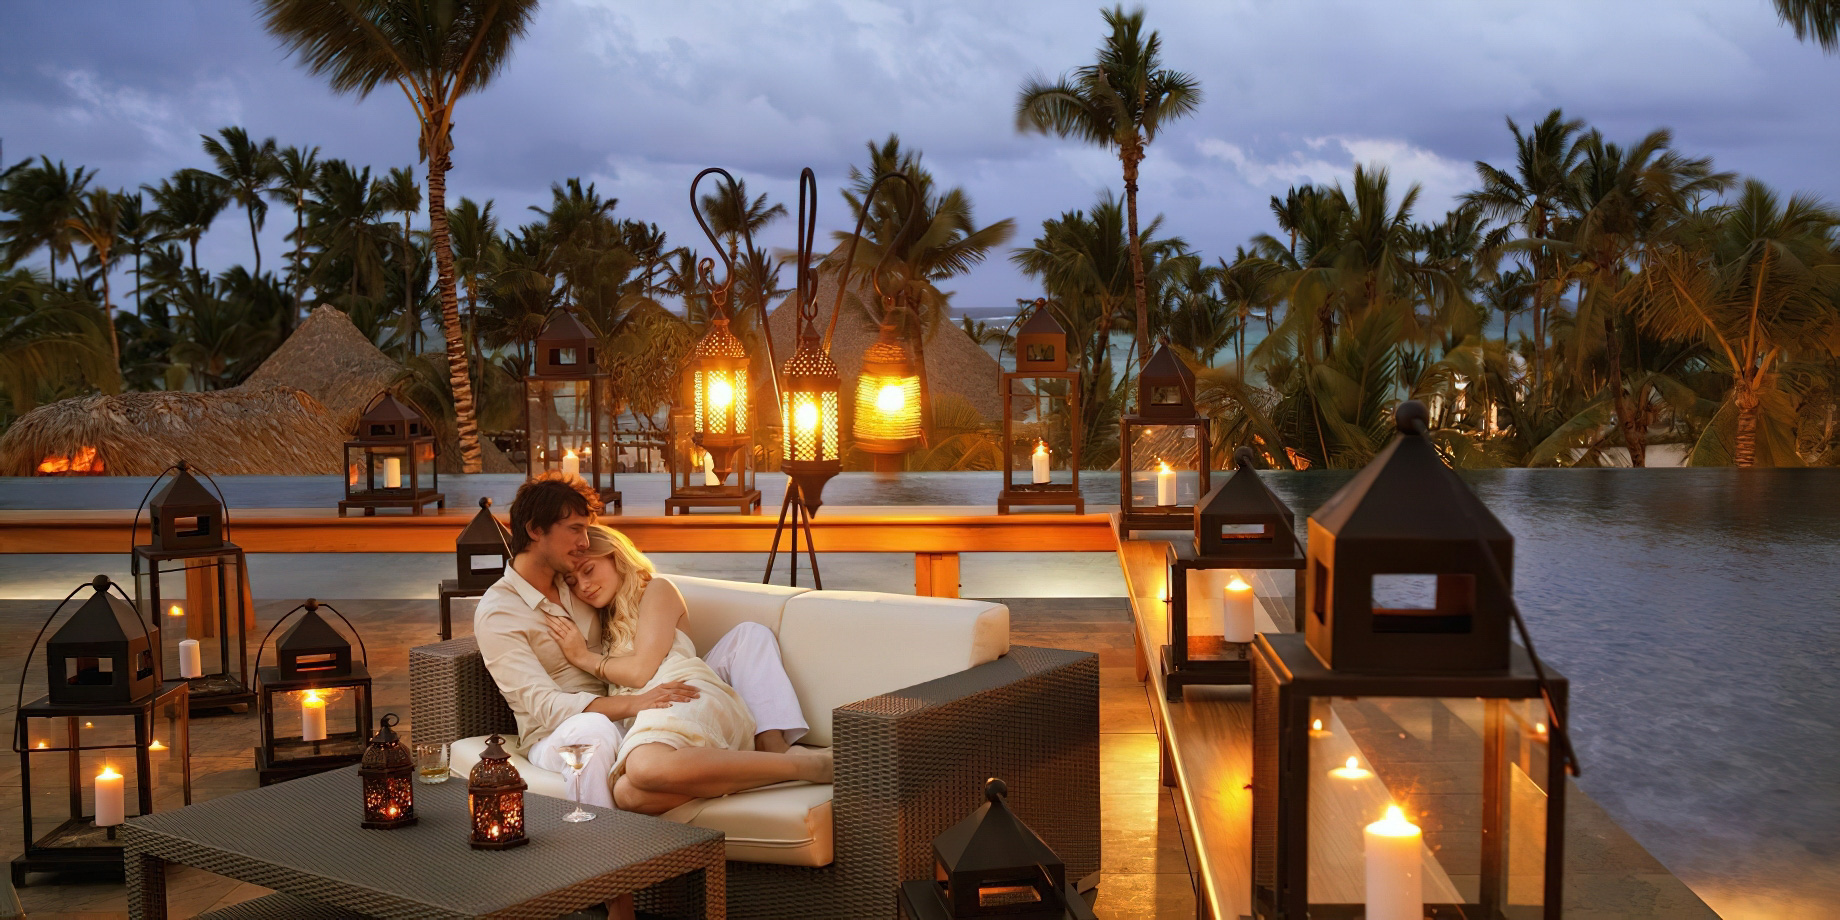 Barceló Bávaro Palace Hotel Grand Resort – Punta Cana, Dominican Republic – Sunset